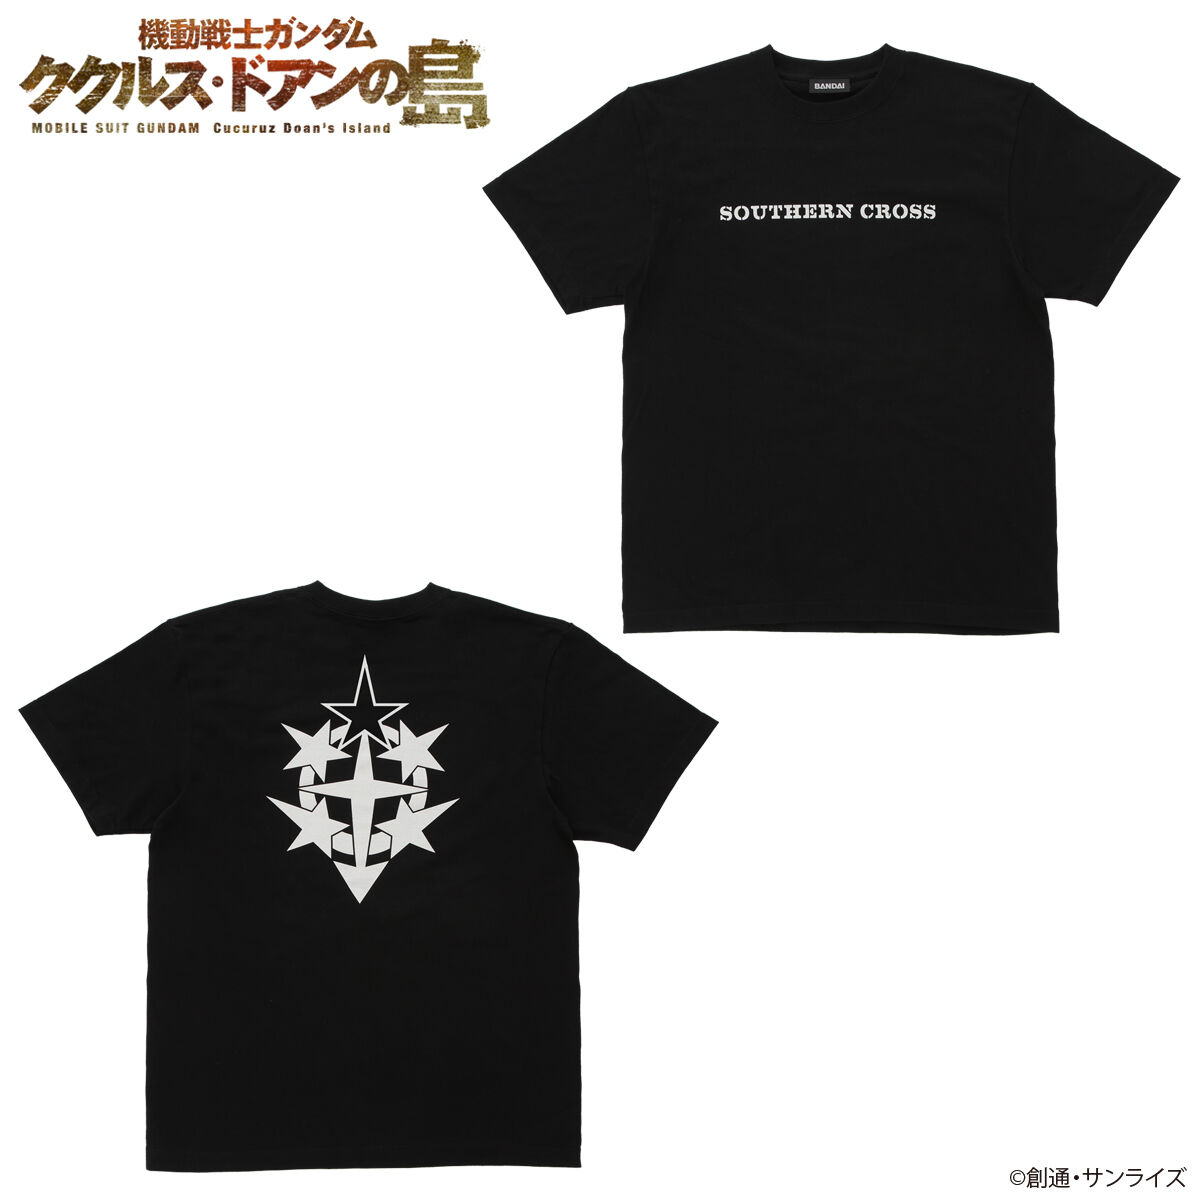 Mobile Suit Gundam Cucuruz: Doan's Island BLACK Series Southern Cross Corps T-Shirt